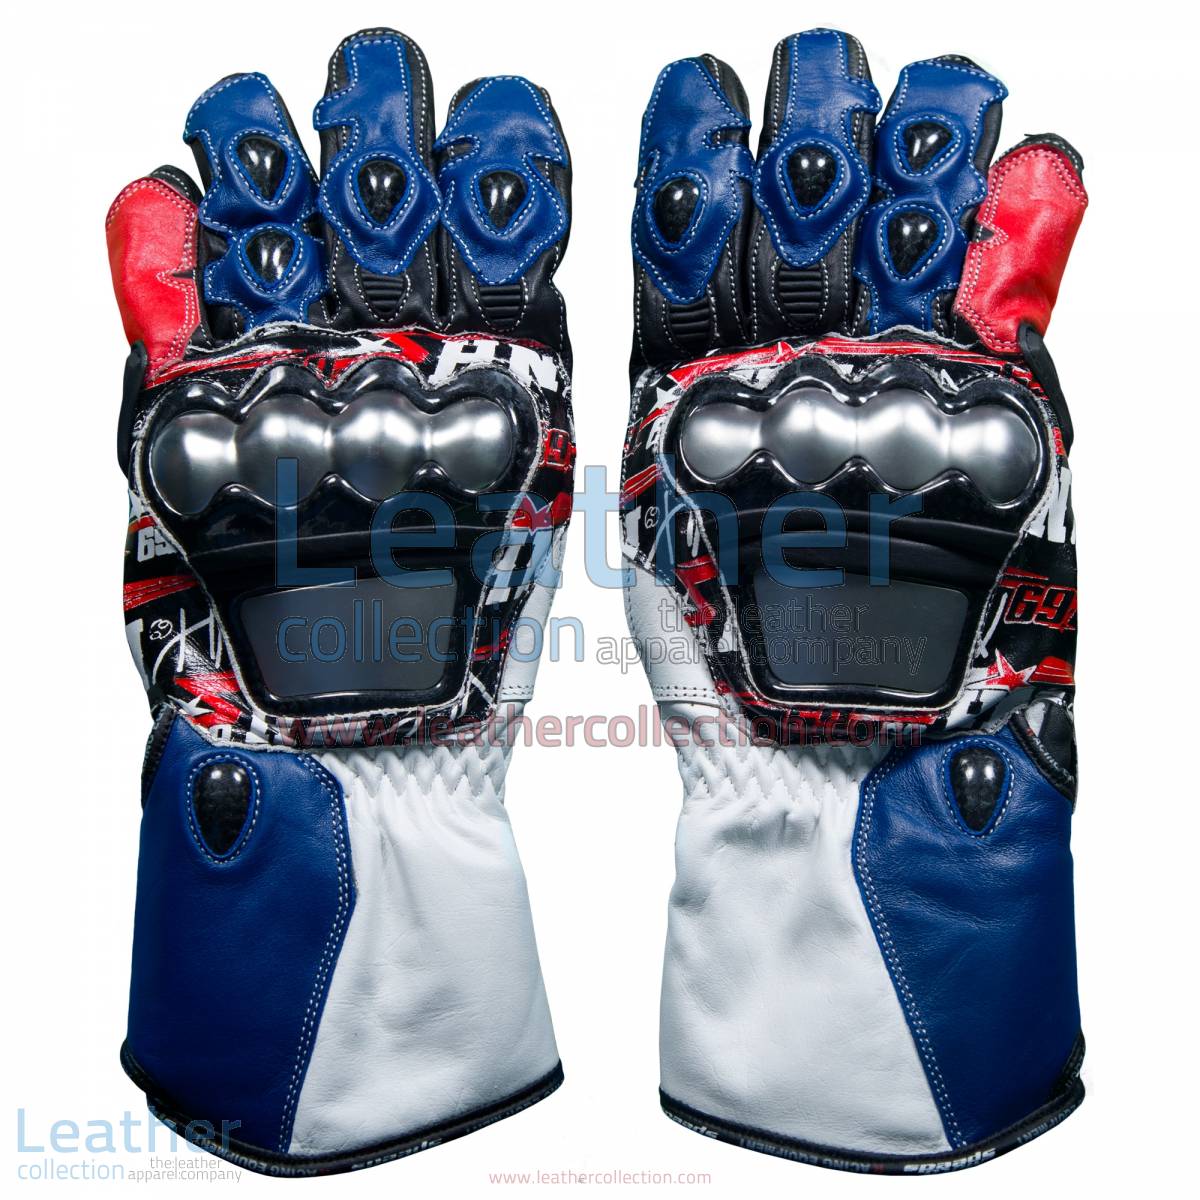 Nicky Hayden WSBK 2017 Leather Racing Gloves